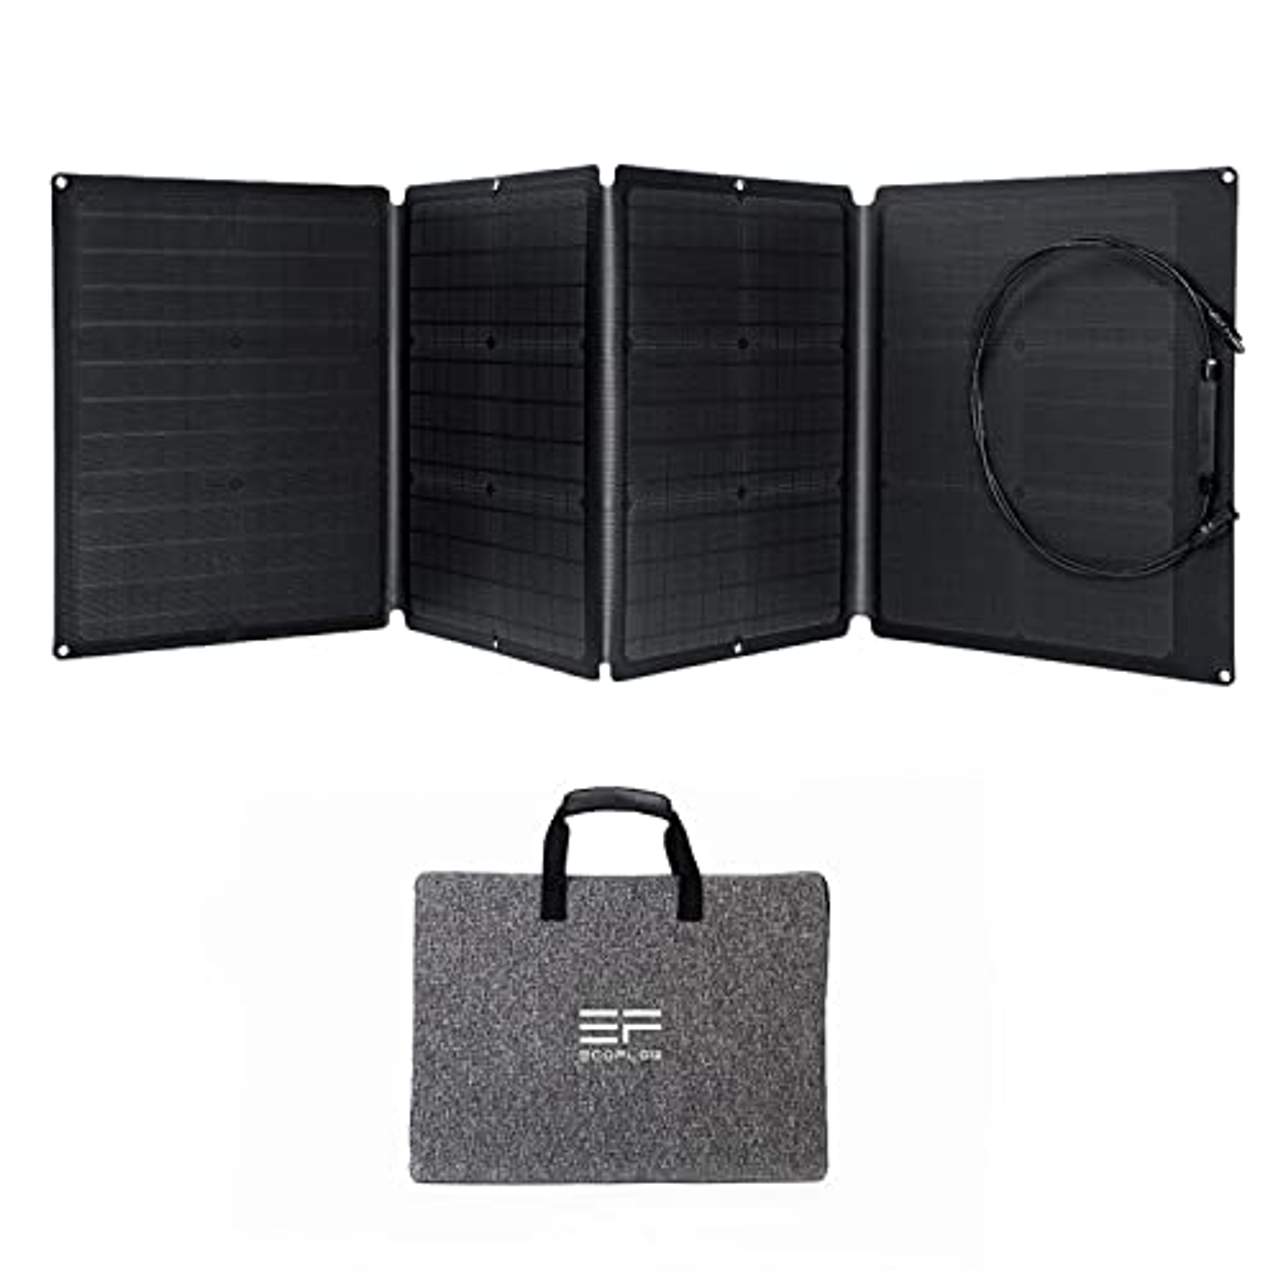 EF ECOFLOW 160W Tragbares Solar Panel